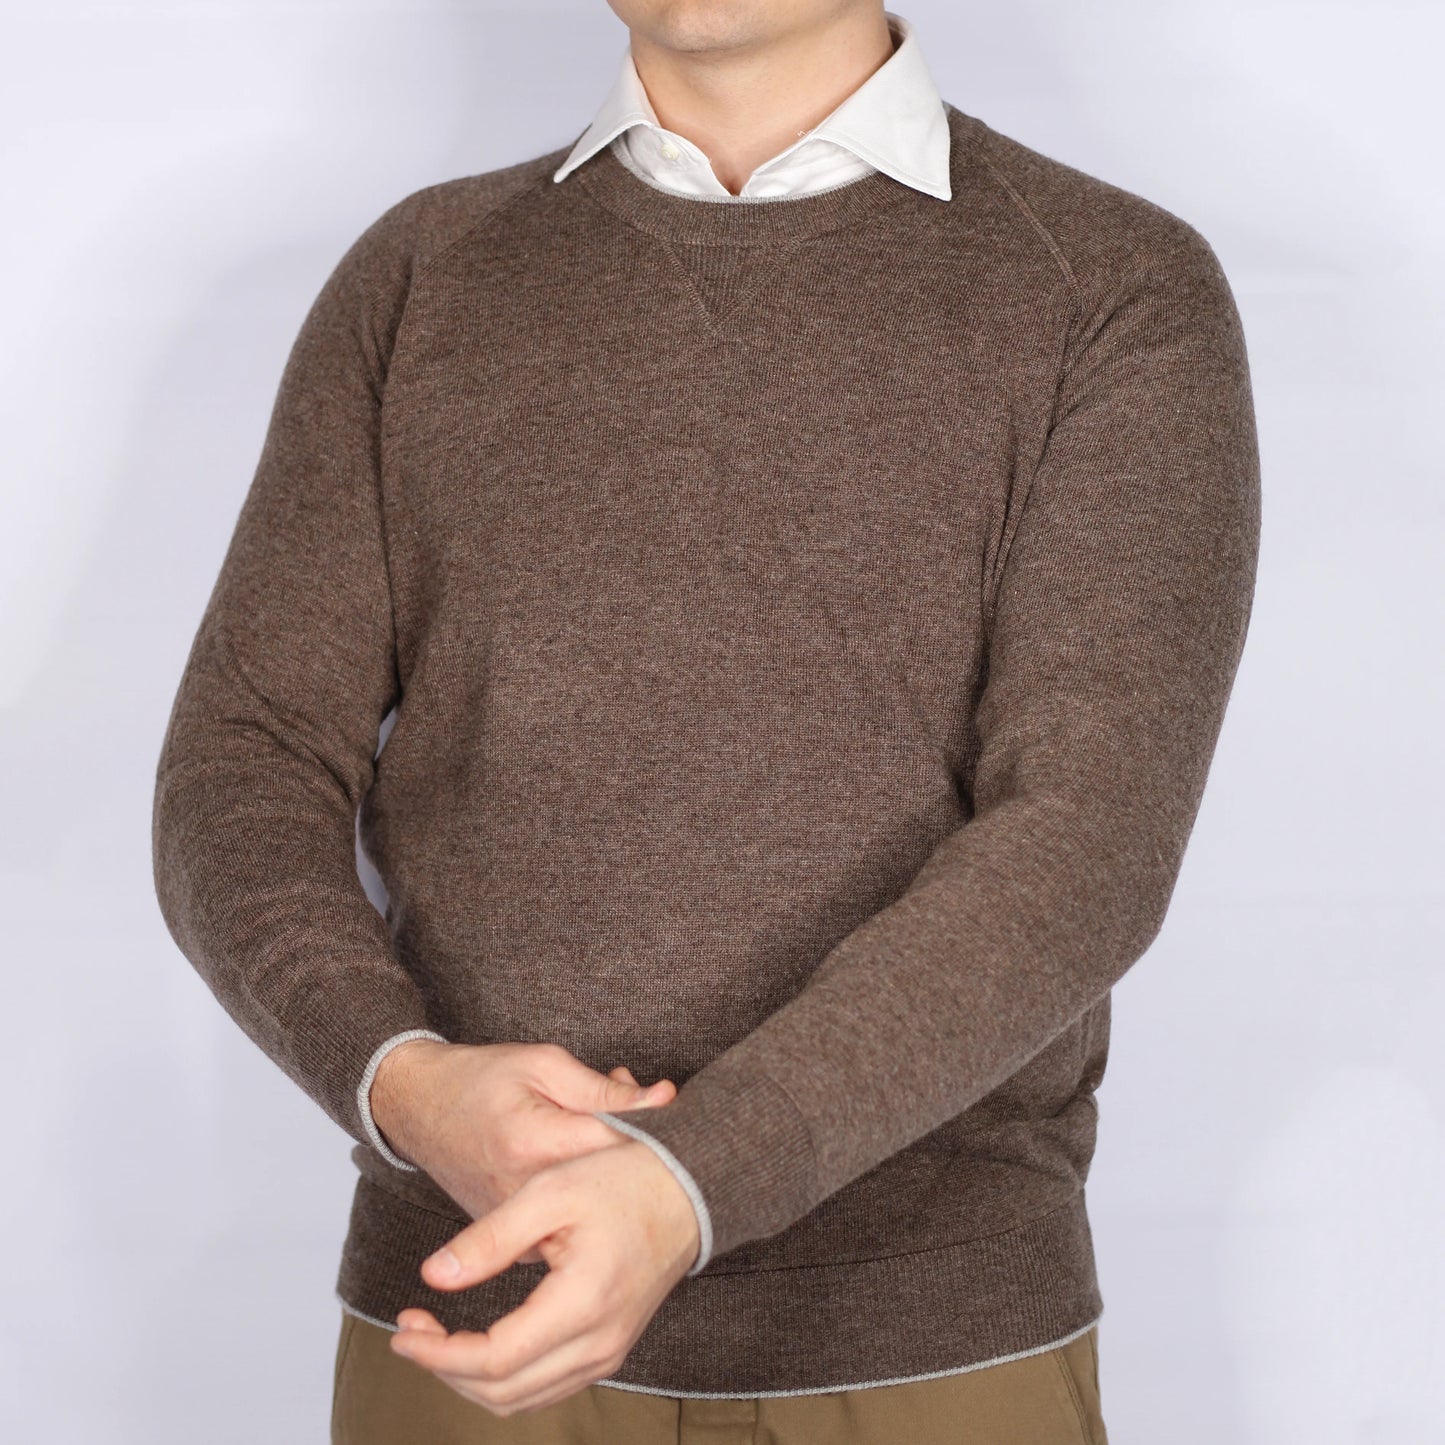 Fusaro Antonio men's wool, cashmere crewneck jersey in brown (MA23076)